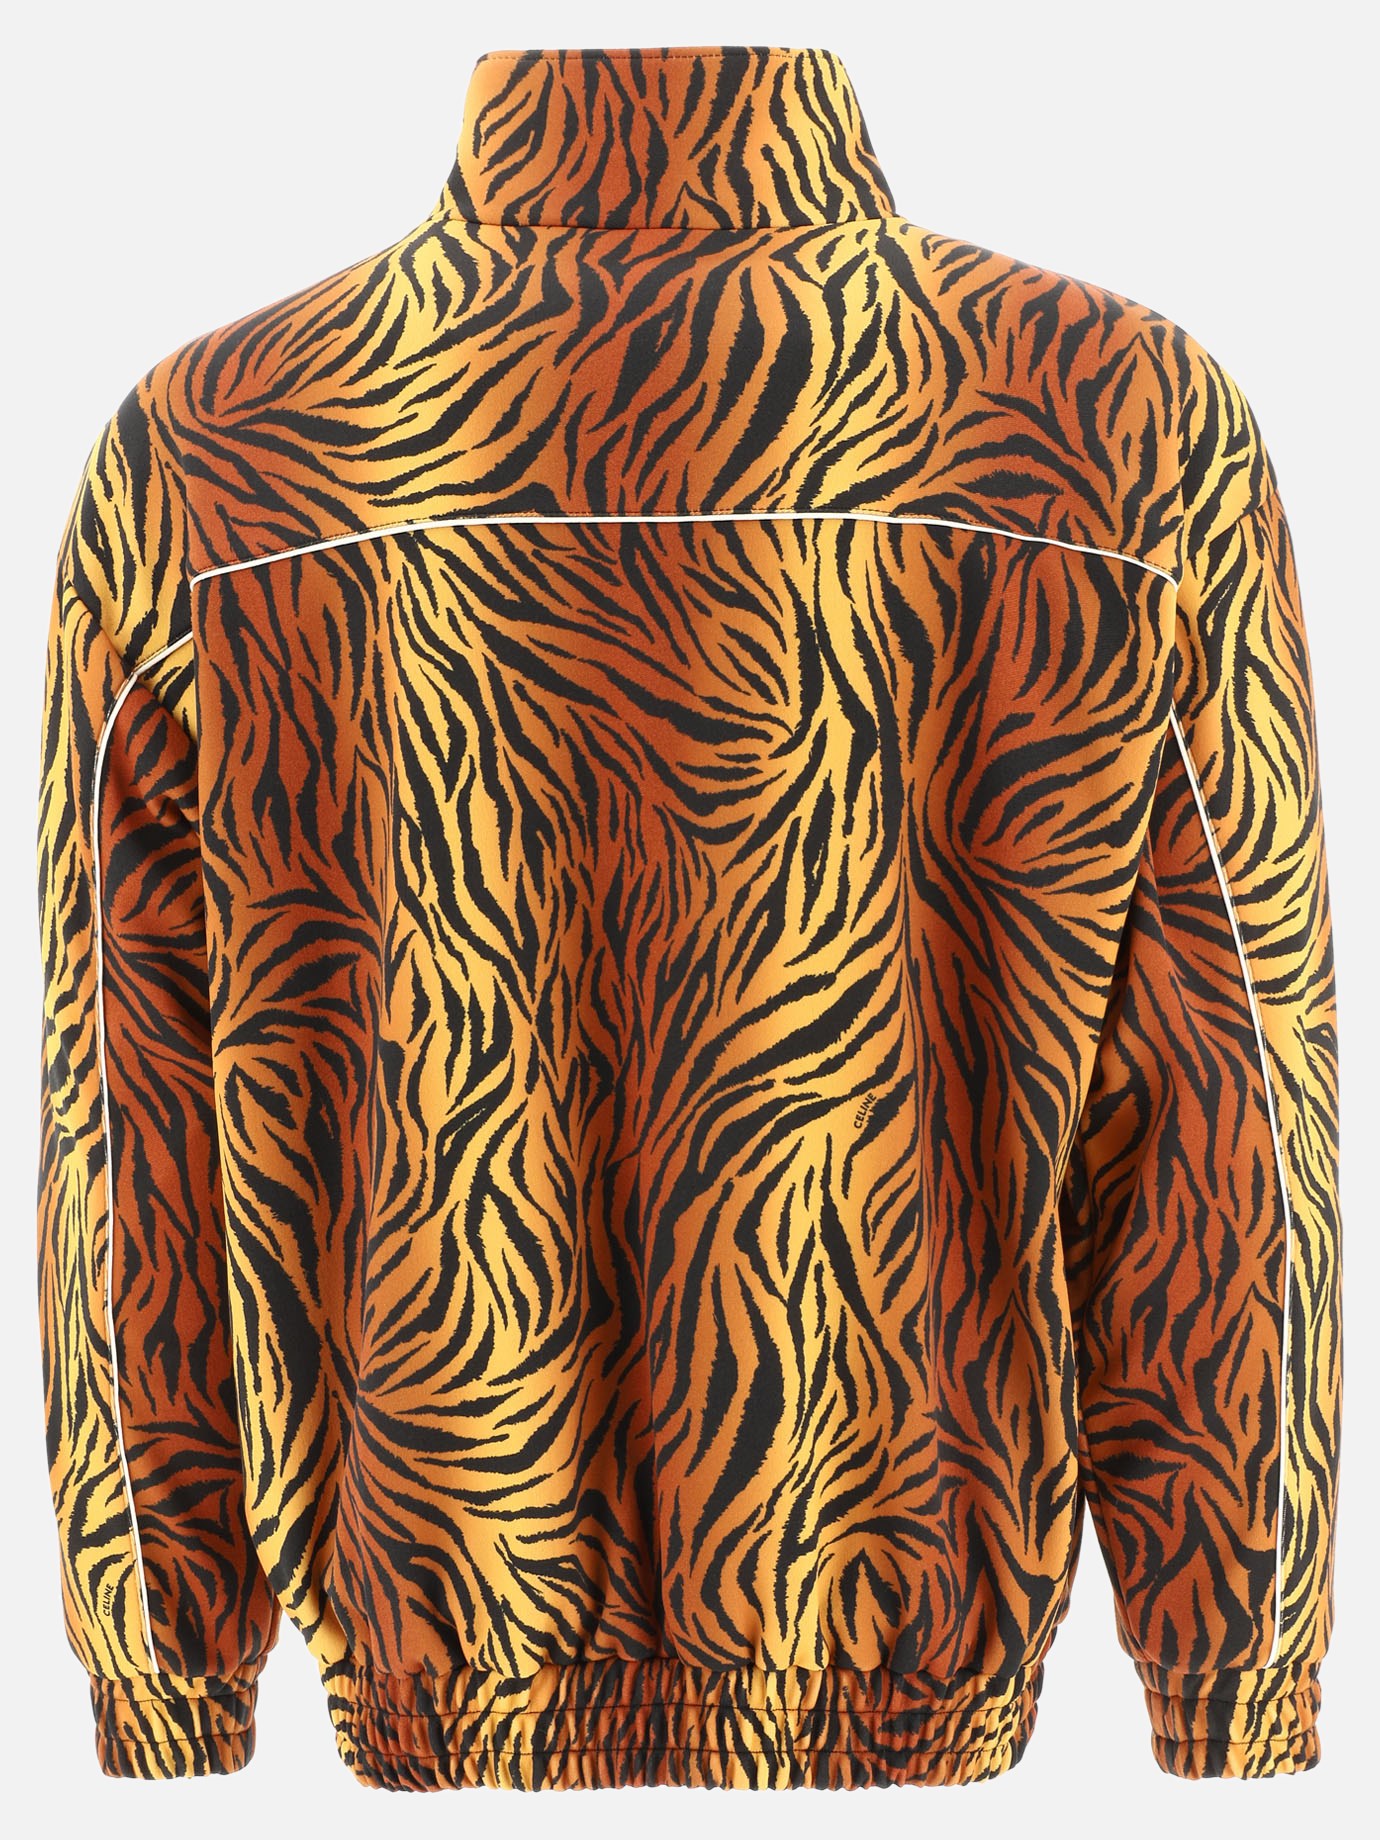  Celine  tiger sweatshirt by Celine